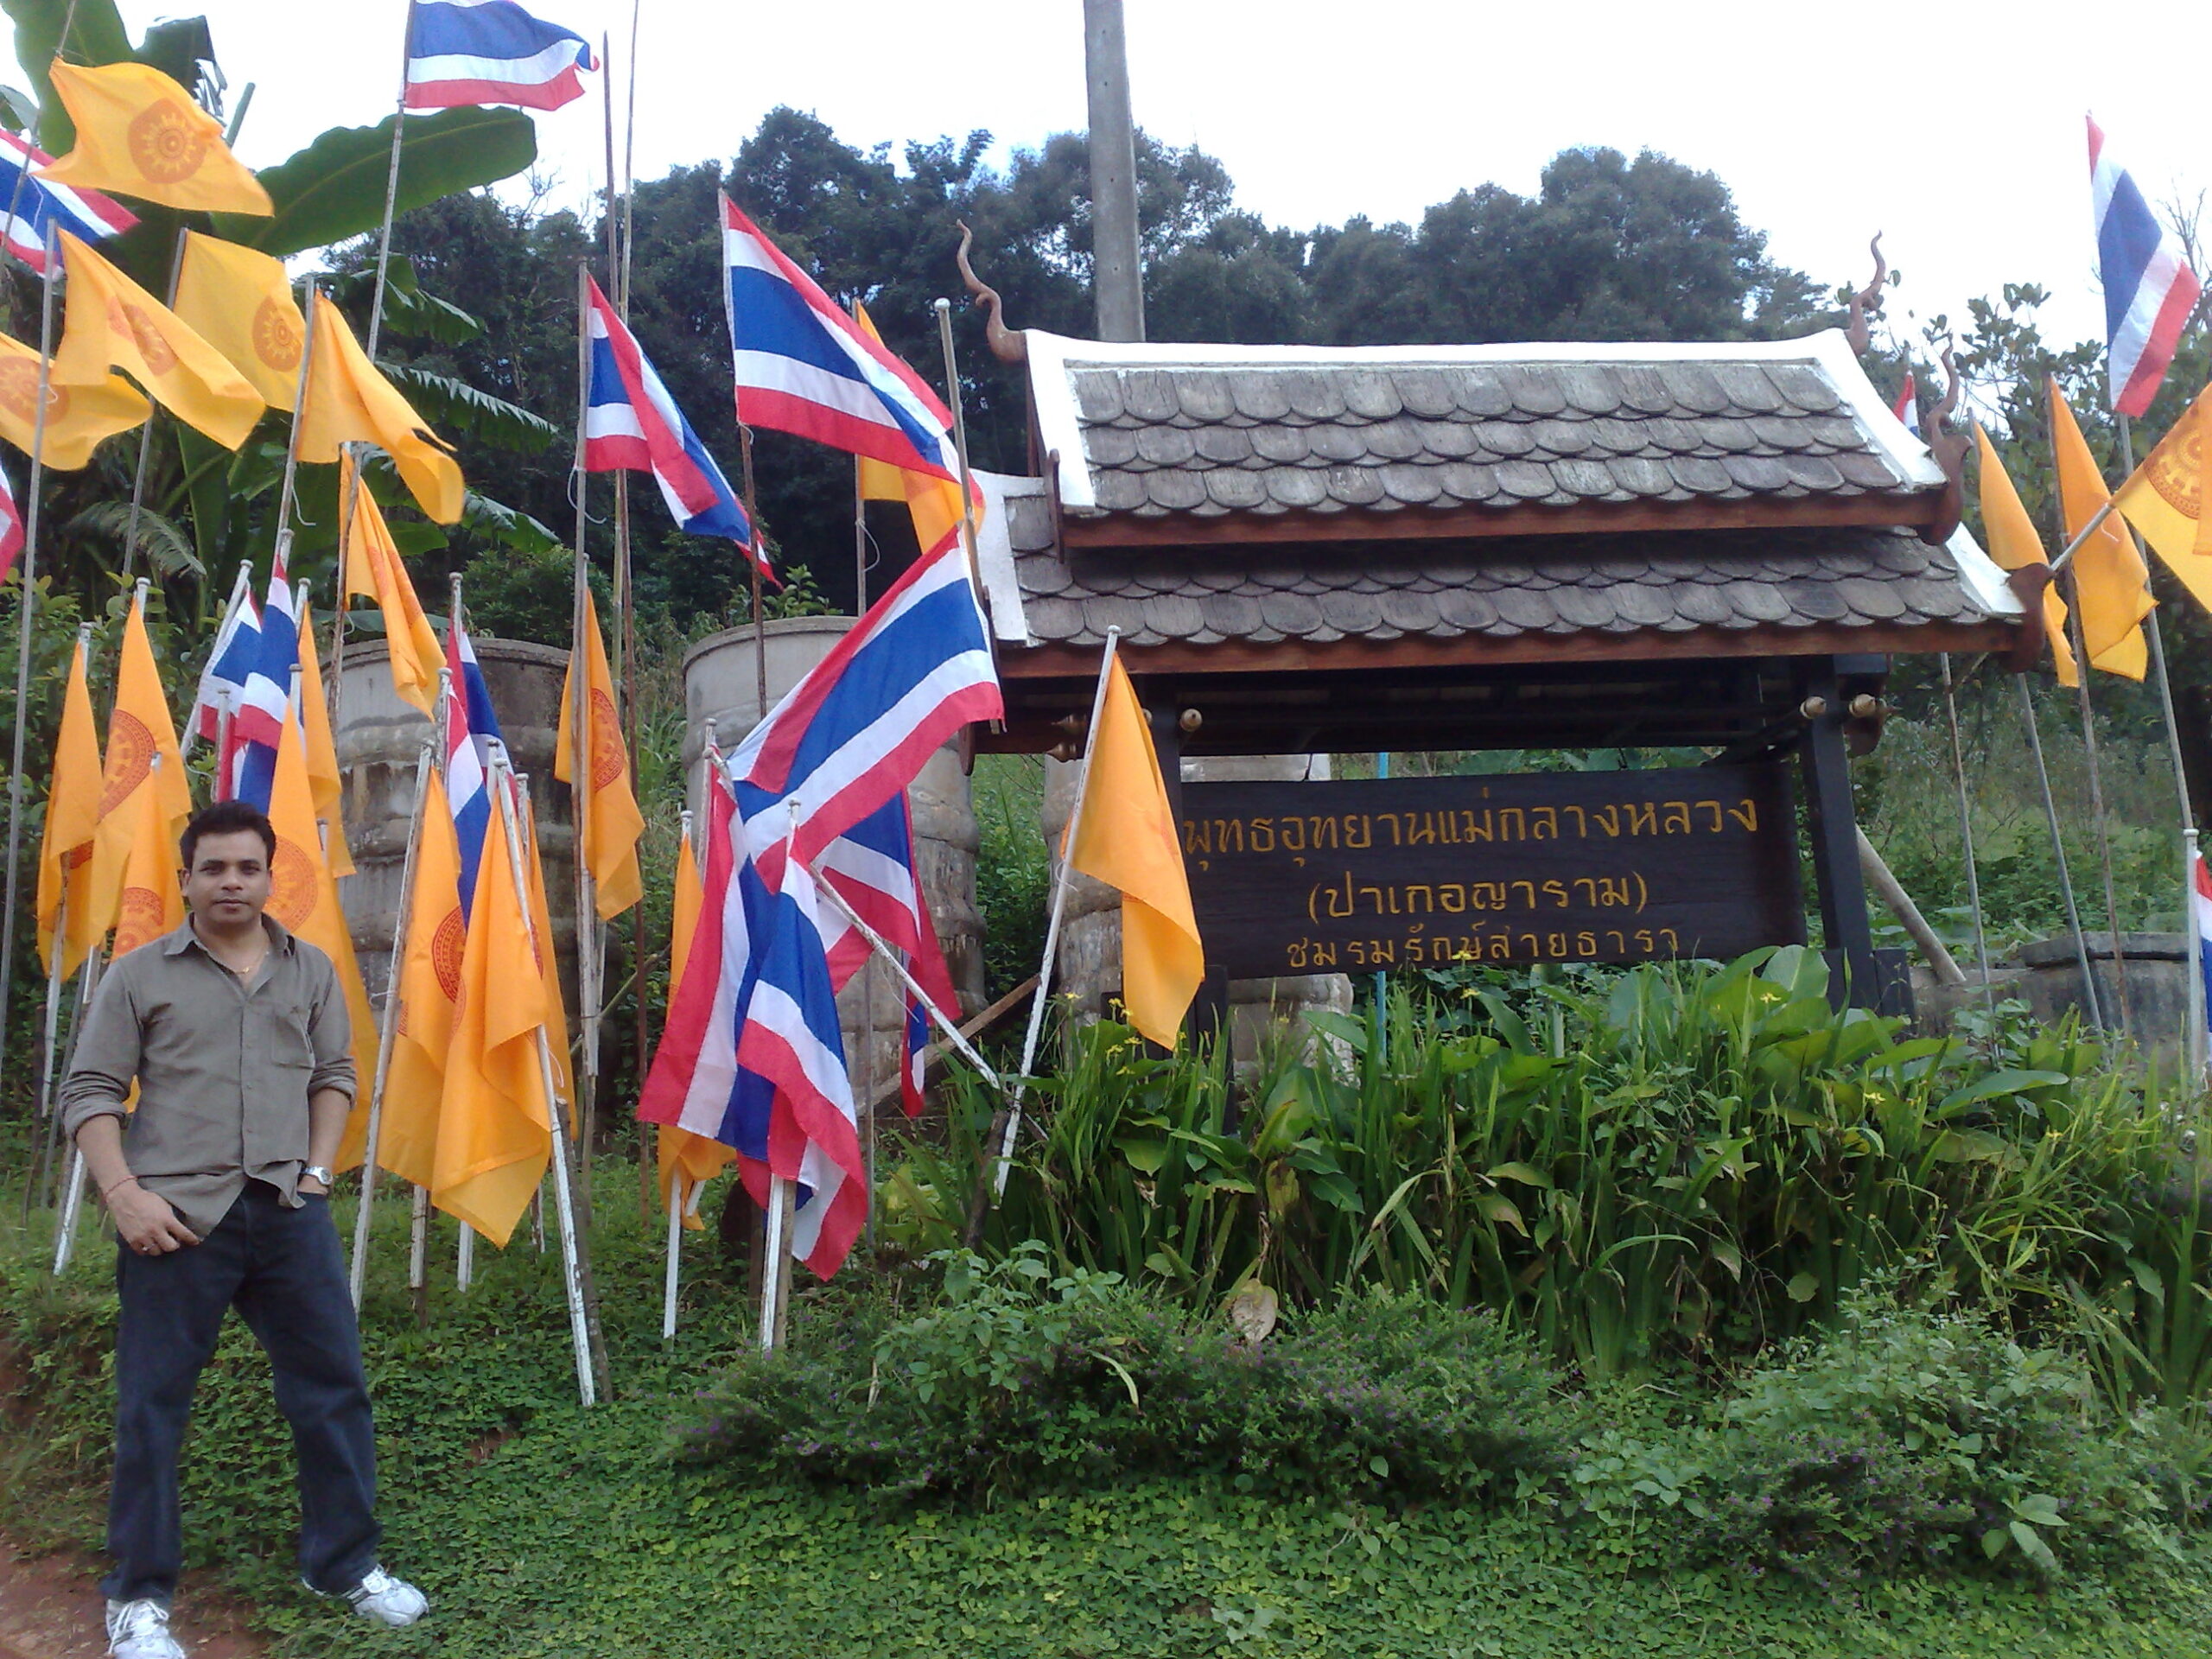 Day 4 - Visited Kirimaya Paradise Ecotourism : Chiang Mai, Thailand (Nov'11) 29